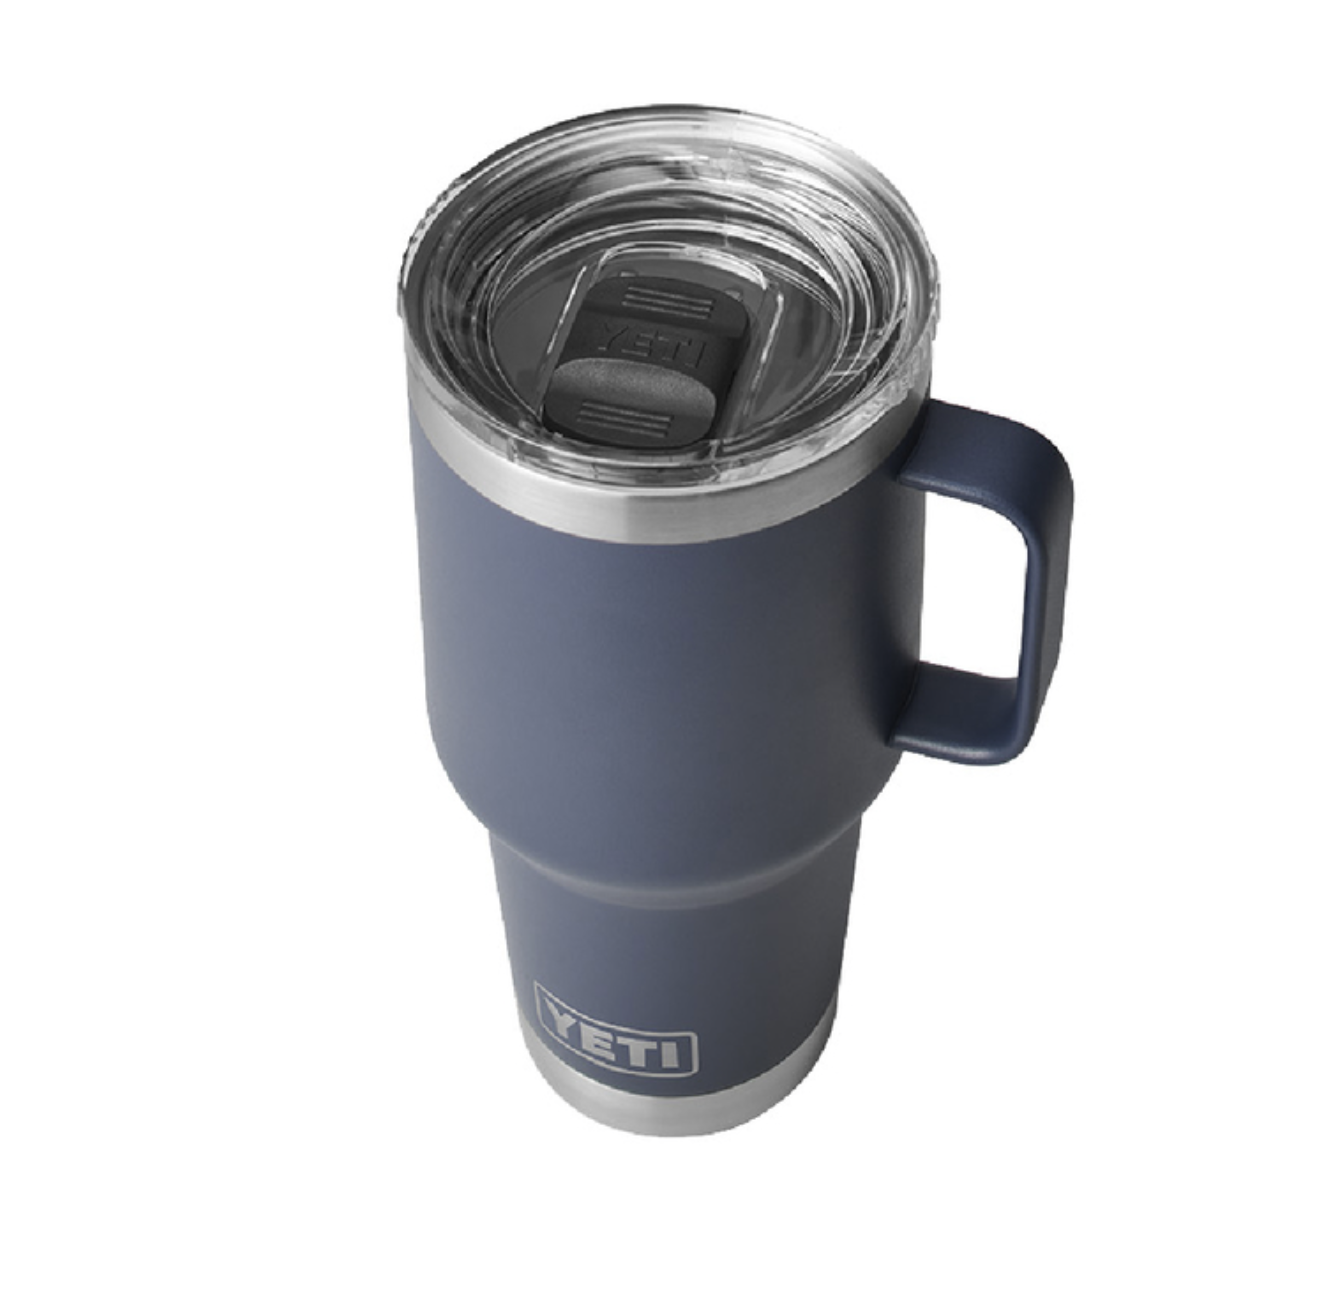 Rambler 30 oz Travel Mug - The Gadget Company